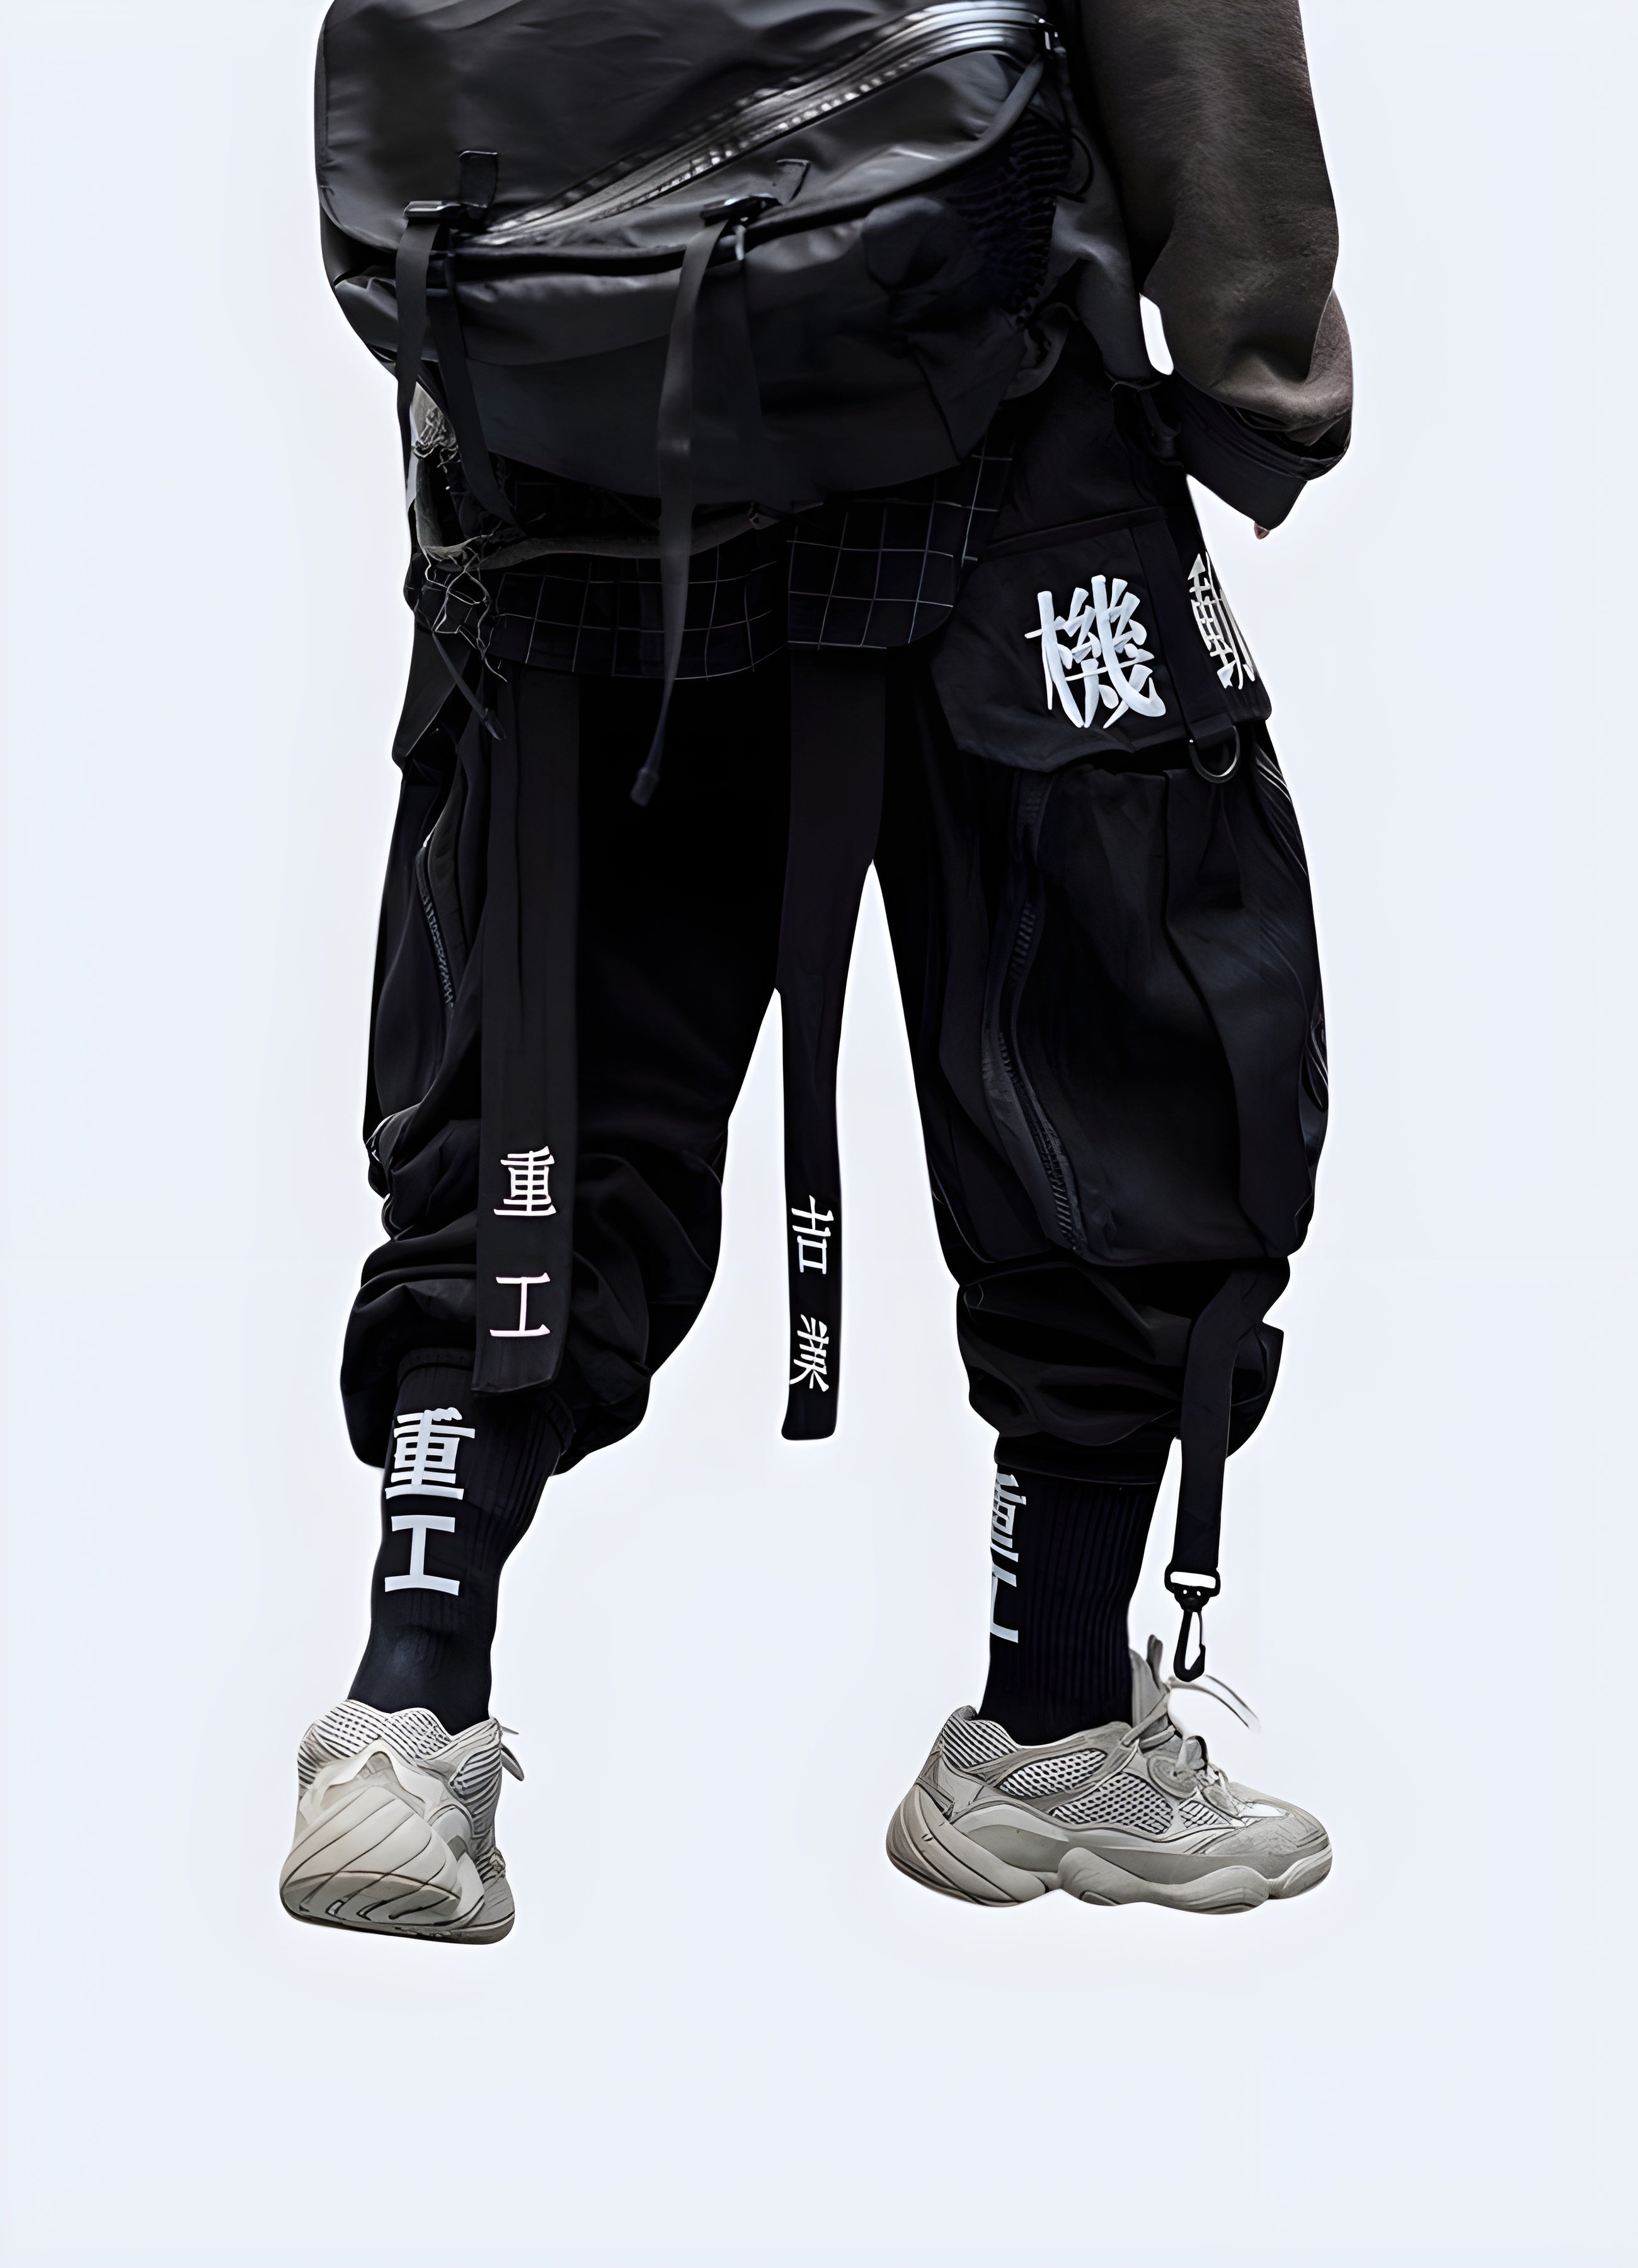 Ninja-inspired shinobi pants with secure pockets.